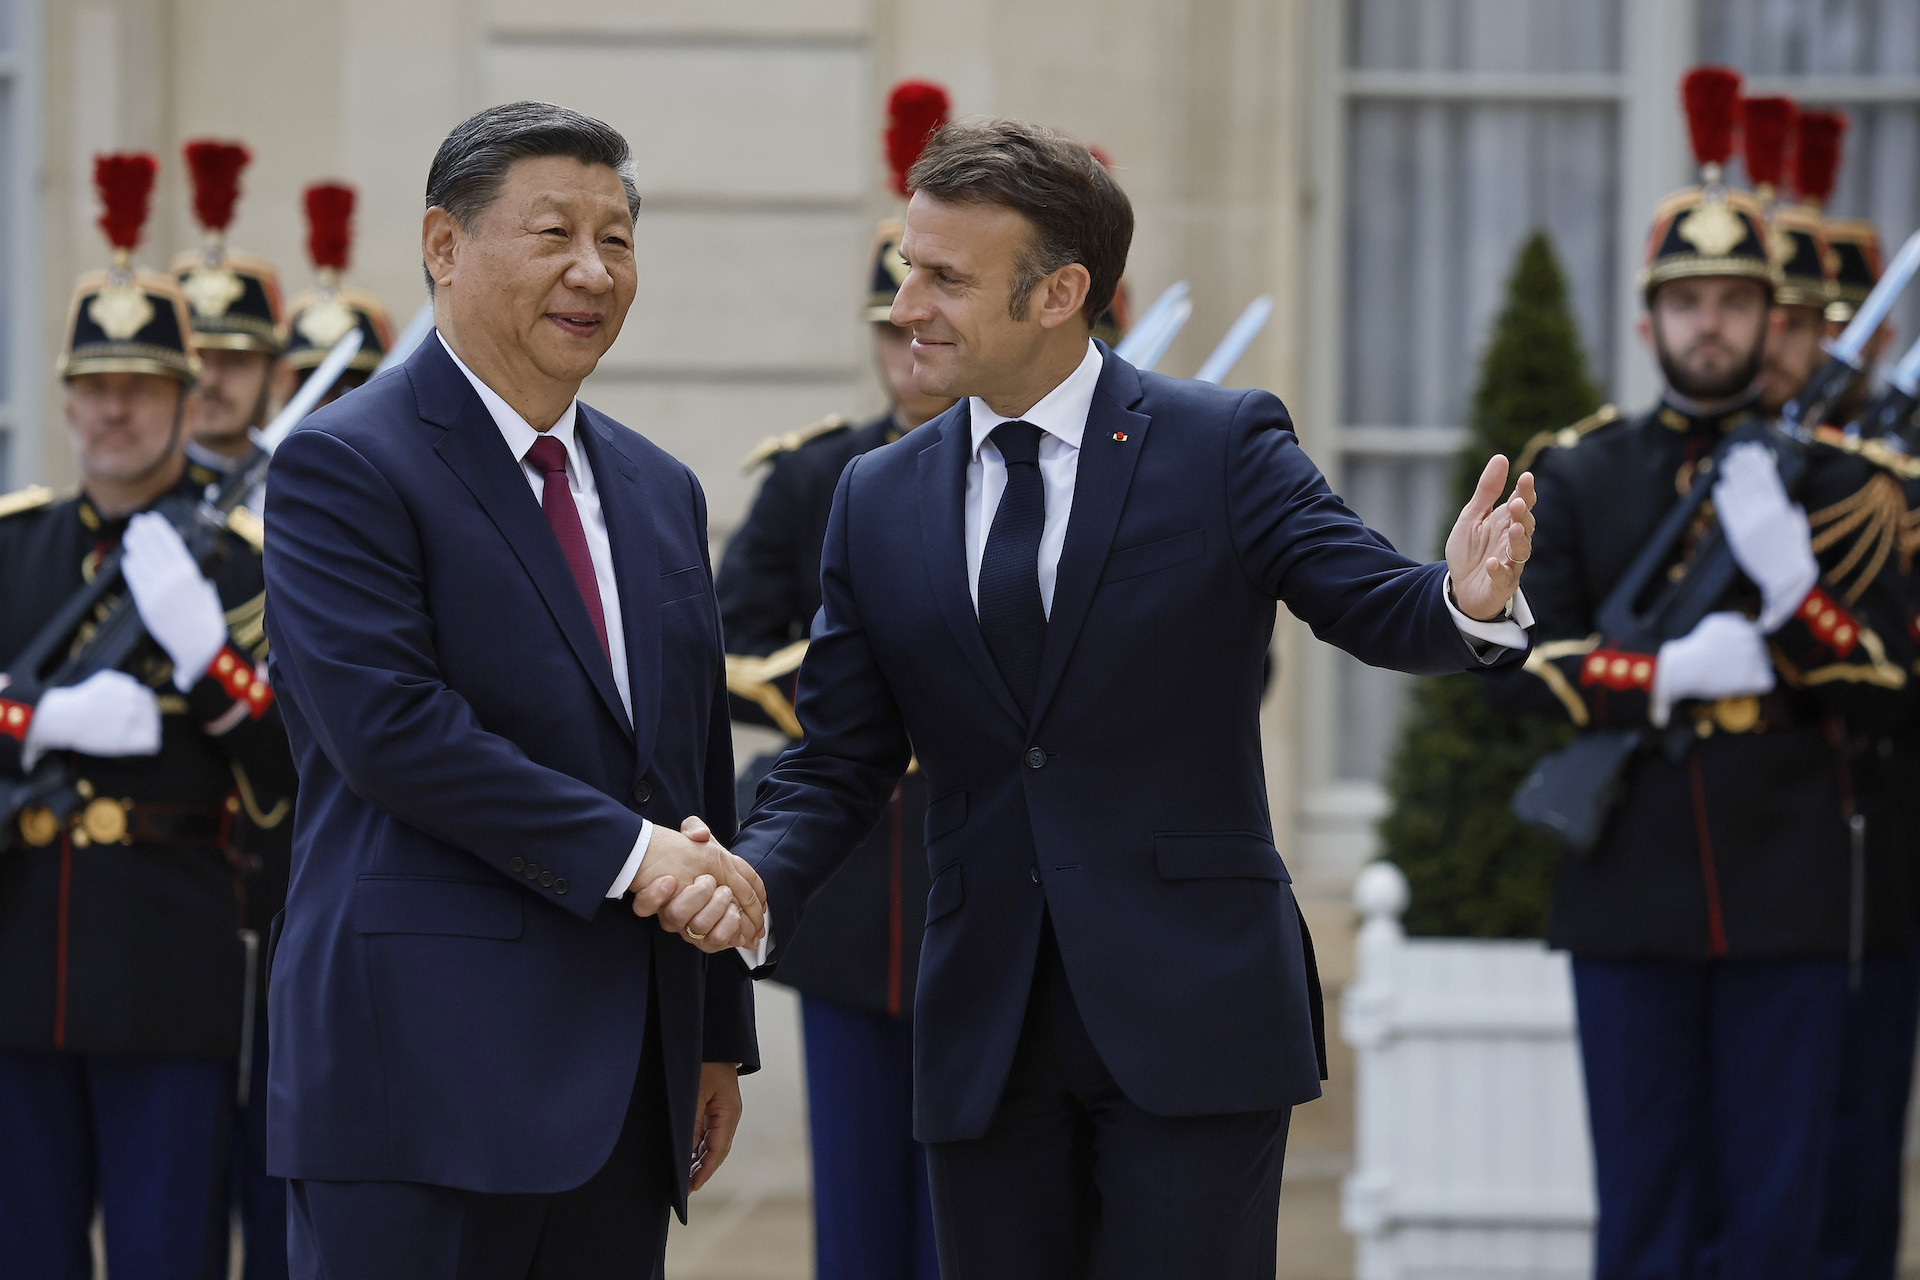 Macron thanks Xi for backing 'Olympic truce'